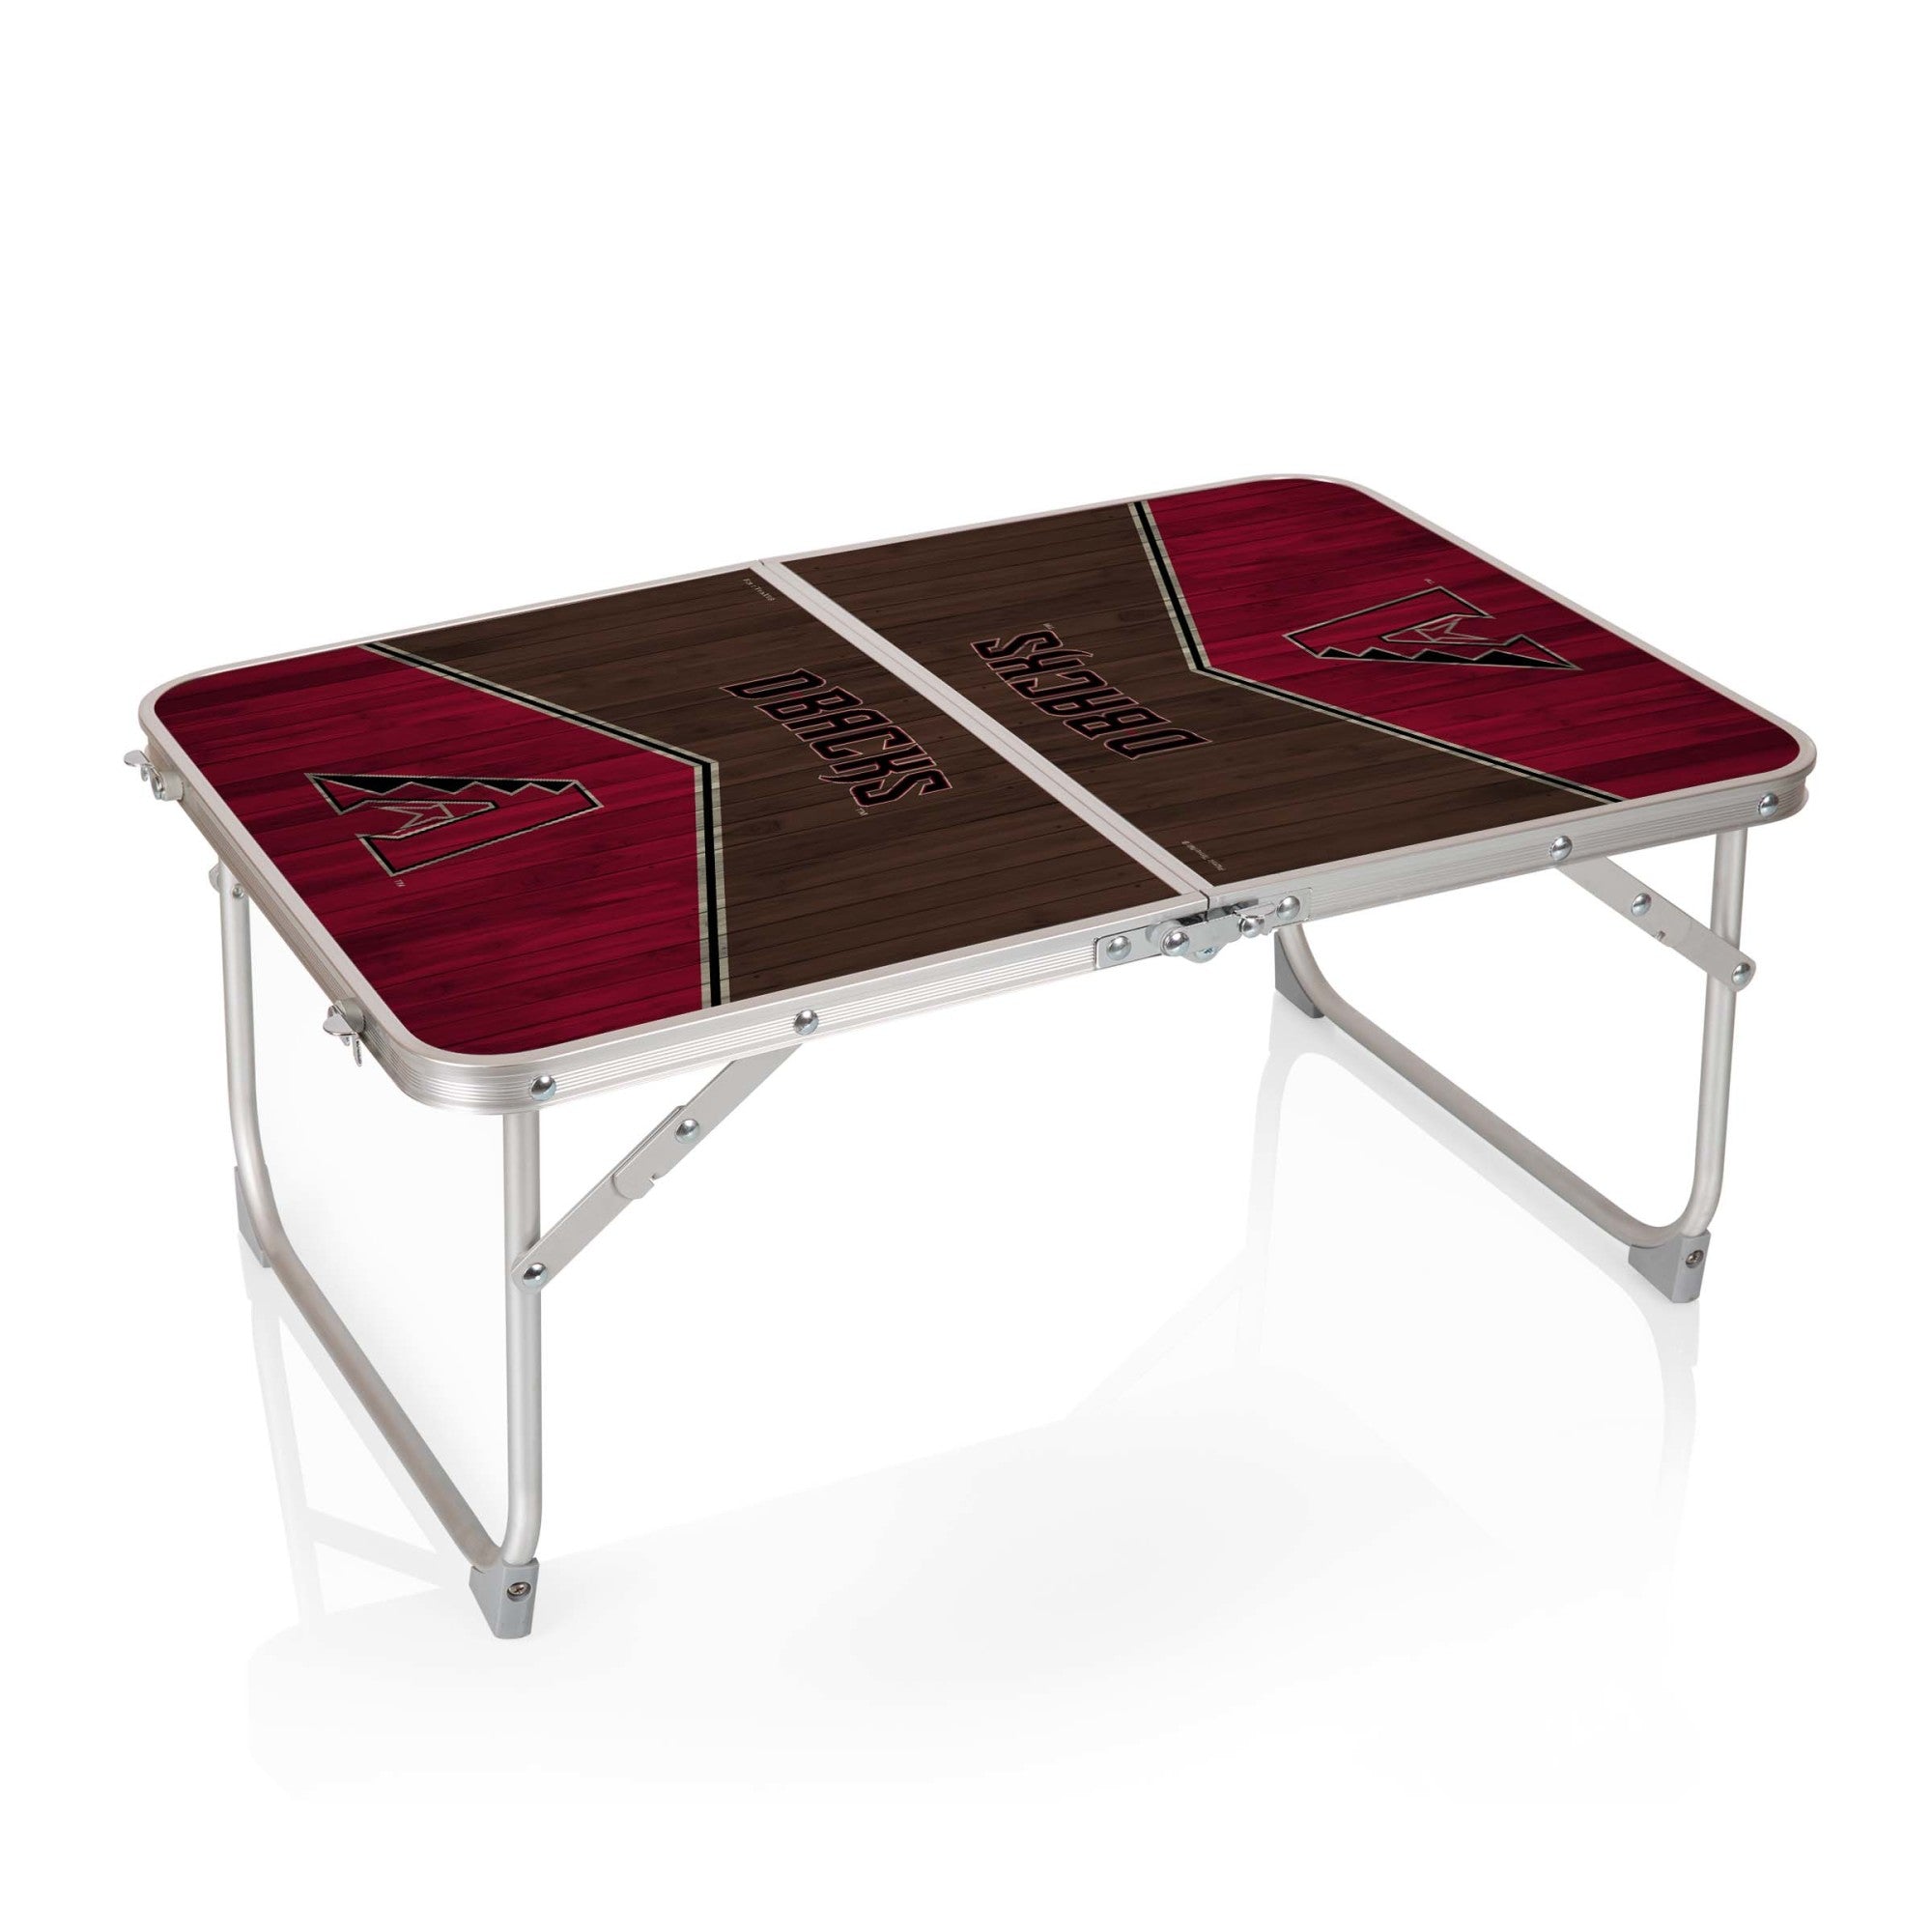 Arizona Diamondbacks - Concert Table Mini Portable Table